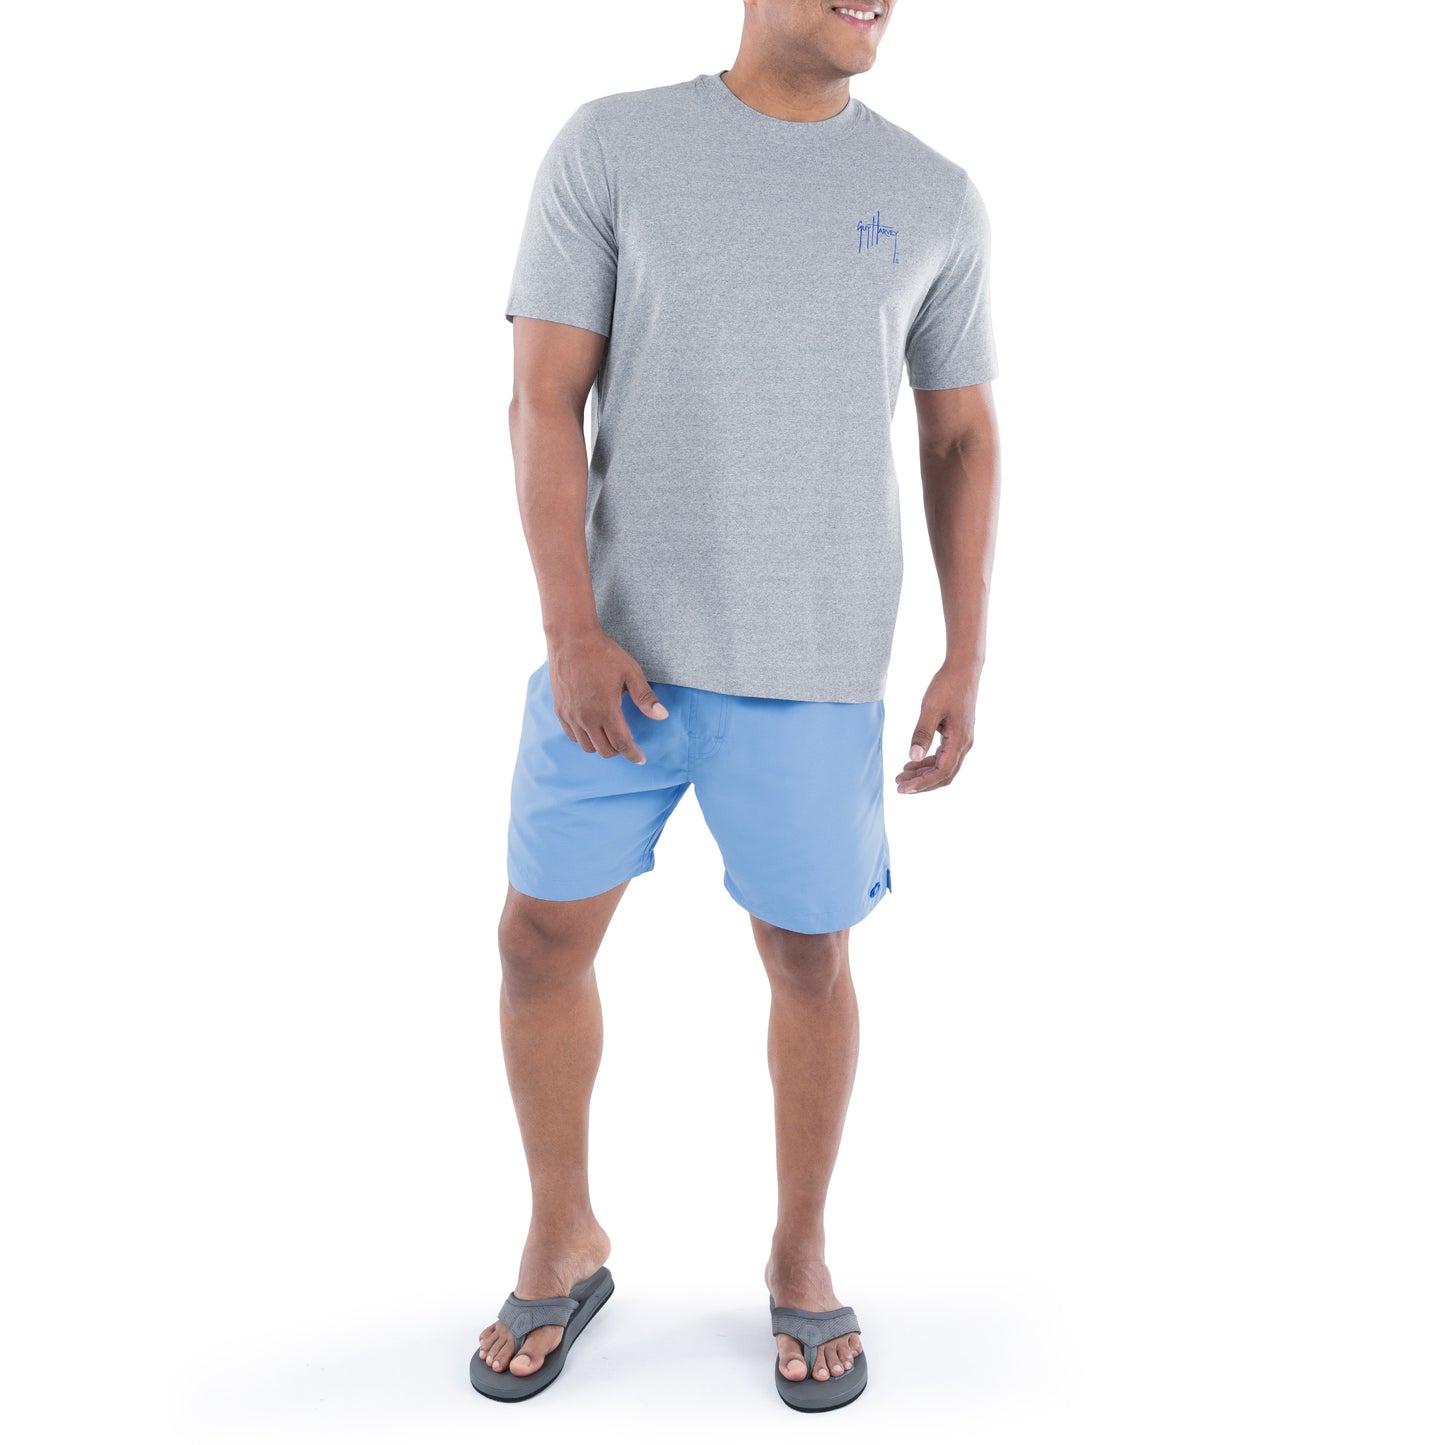 Men's Tropic Tuna Threadcycled Short Sleeve T-Shirt